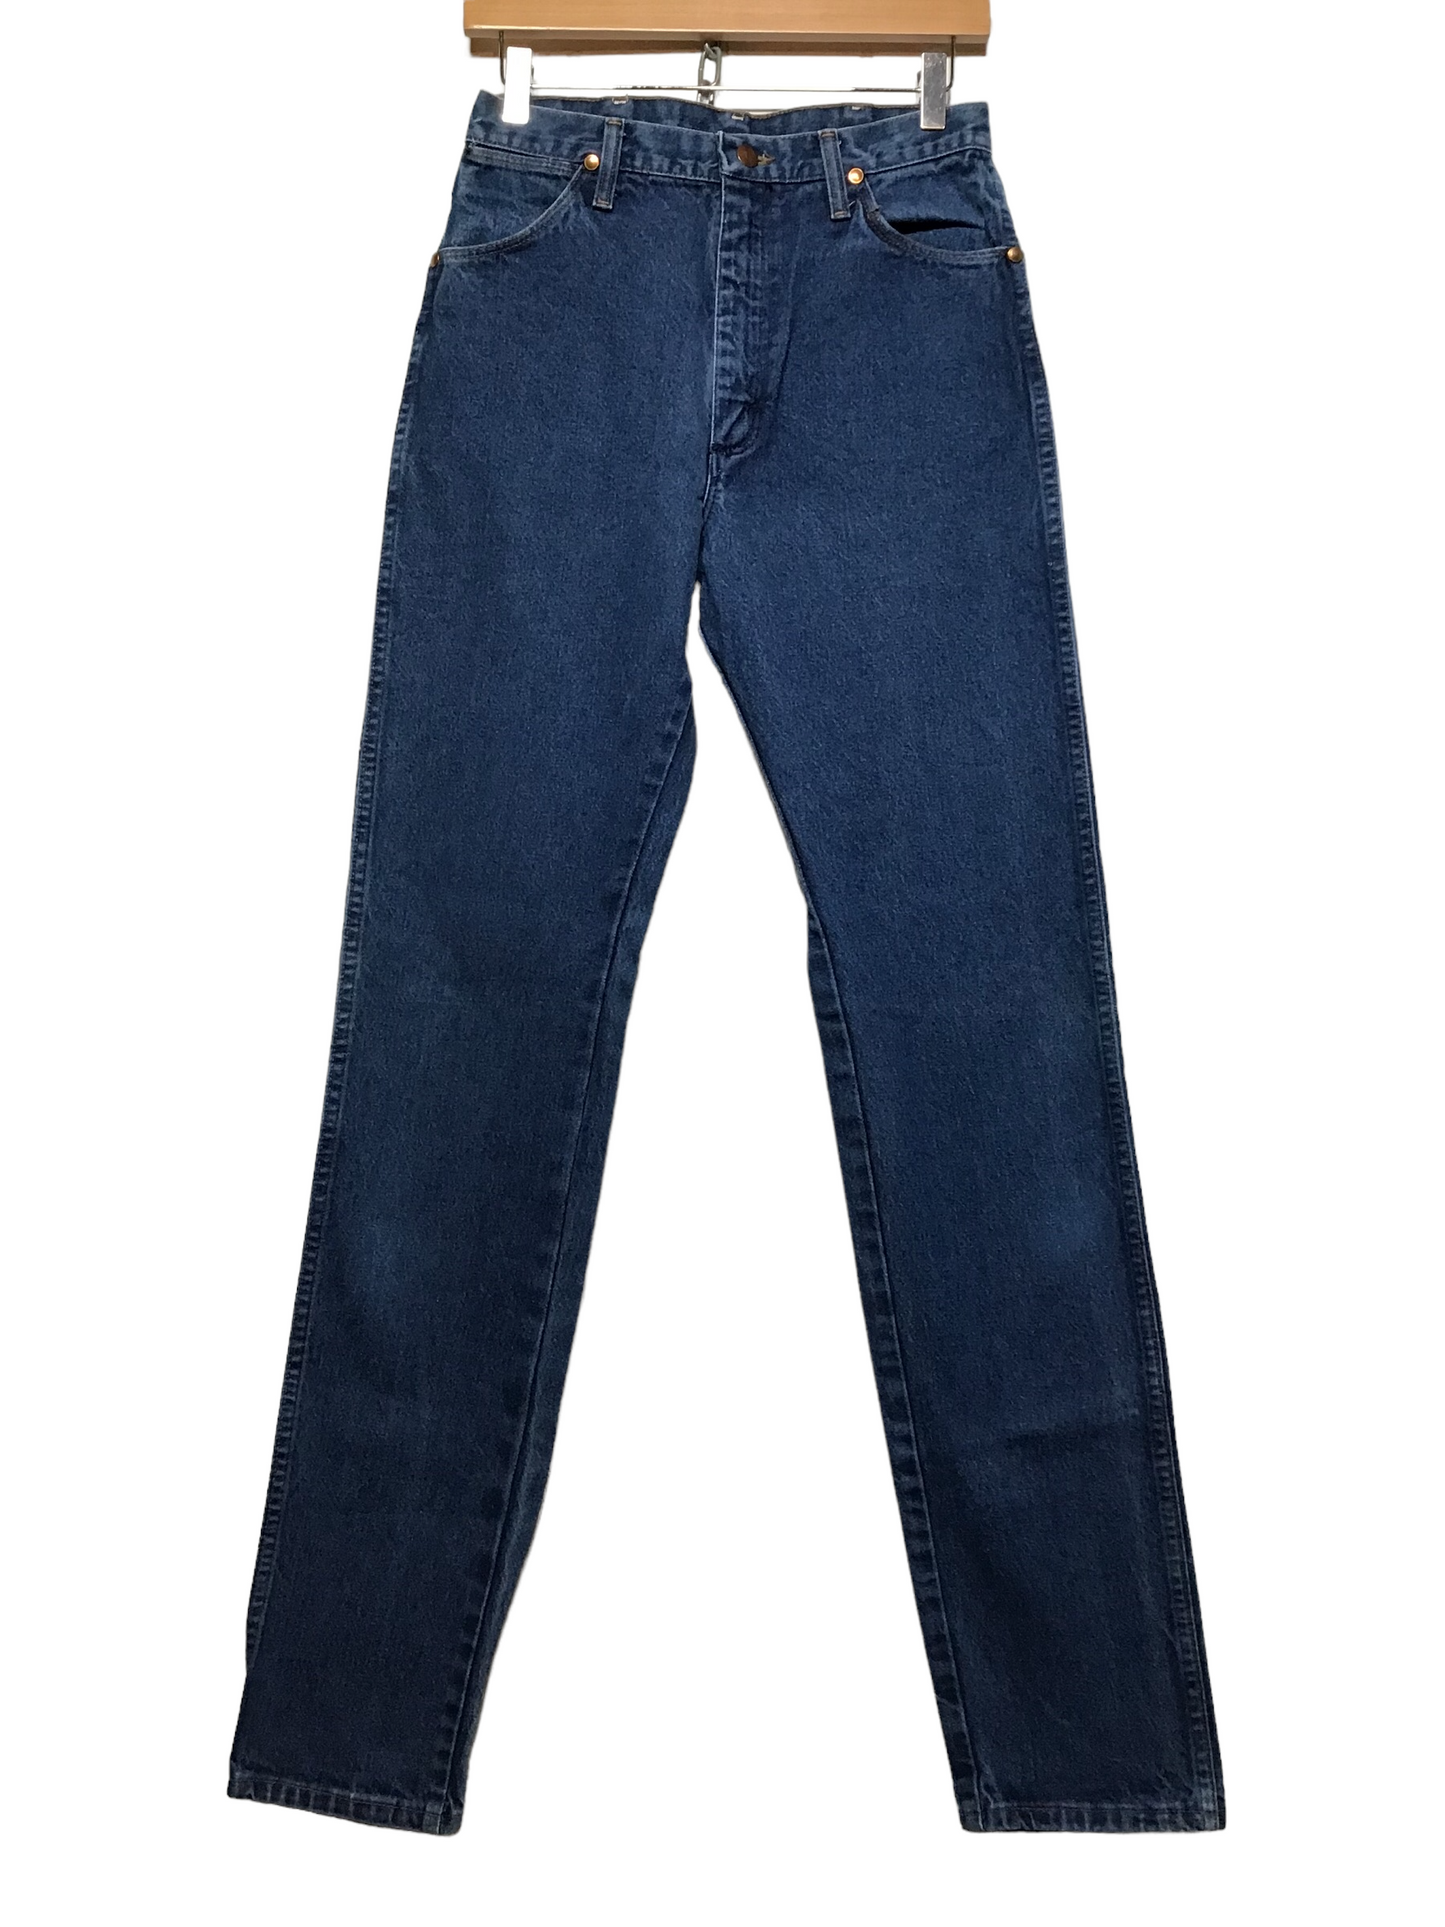 Wrangler Jeans (26X35)